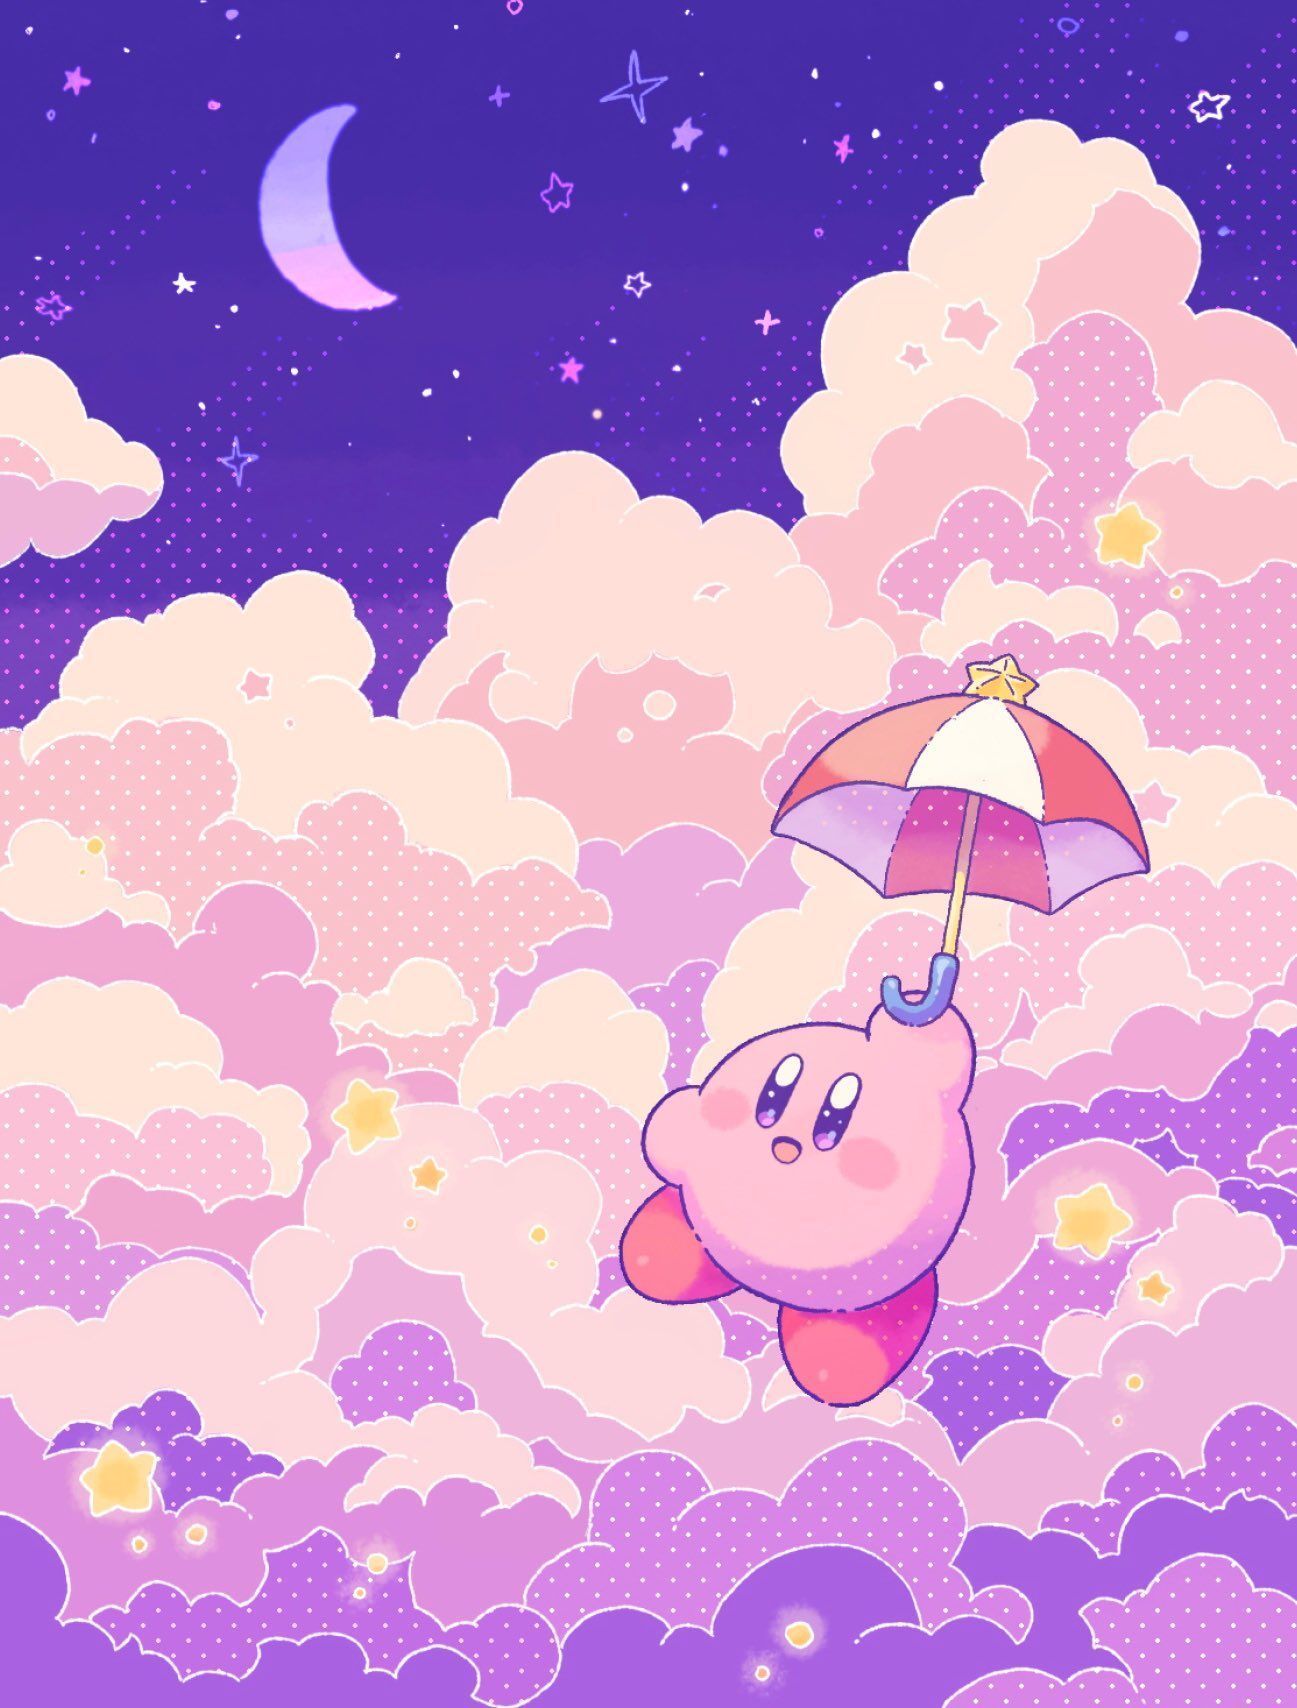 Wallpaper kirby, pink, umbrella, stars, clouds, night, cute, kawaii - Nintendo, Kirby